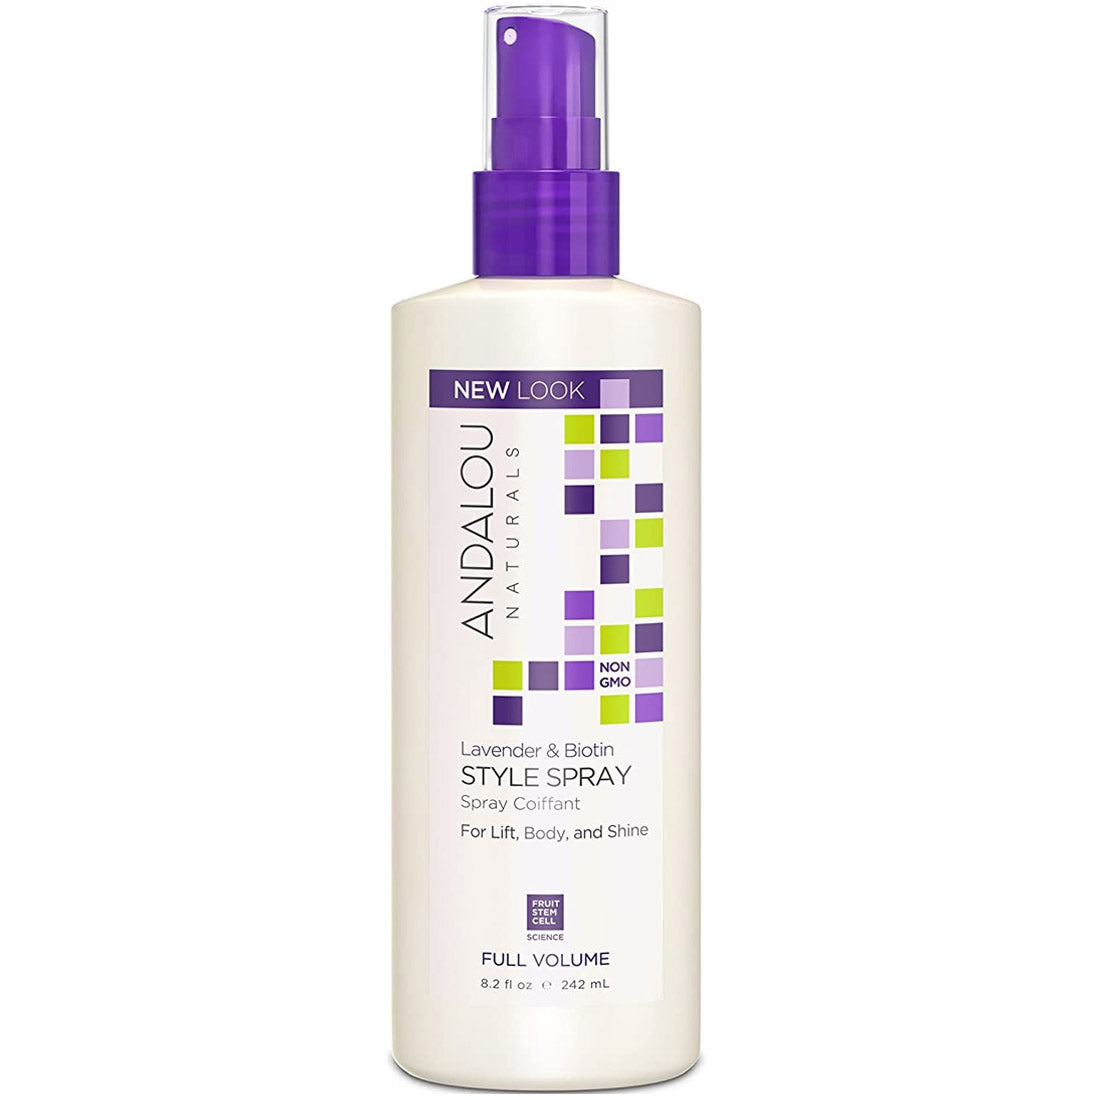 Andalou Naturals Lavender & Biotin Volume Style Spray, 242ml